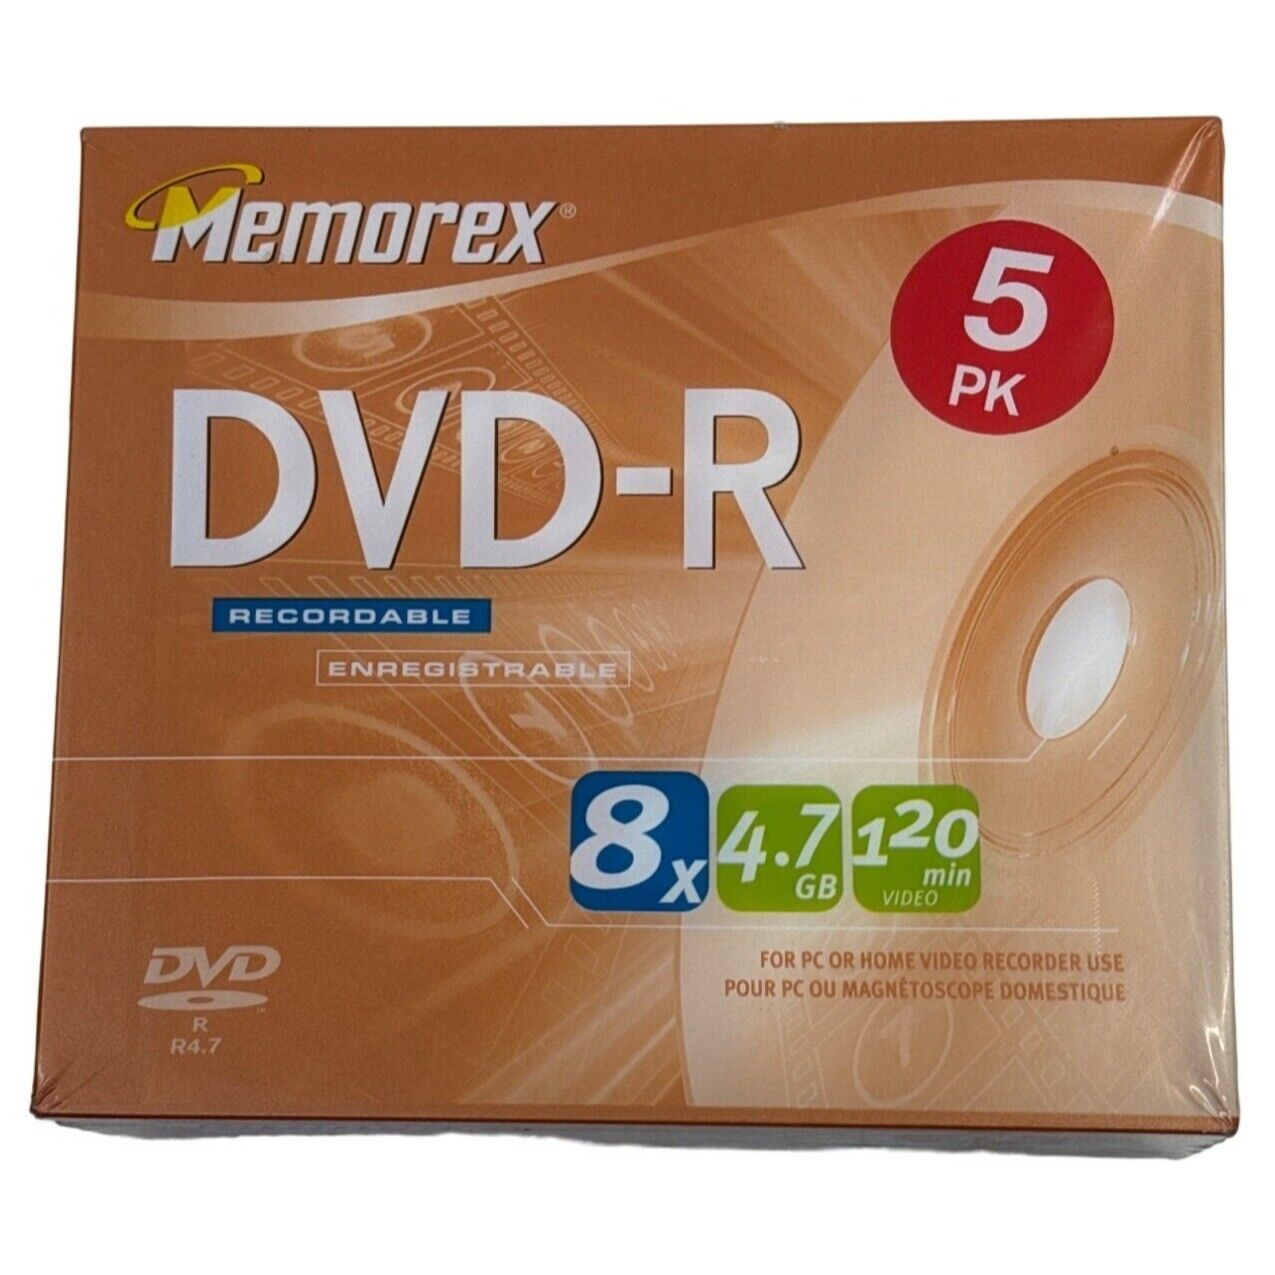 New Memorex 5 Pack DVD-R Recordable Media 8X 4.7 GB, 120 min Sealed